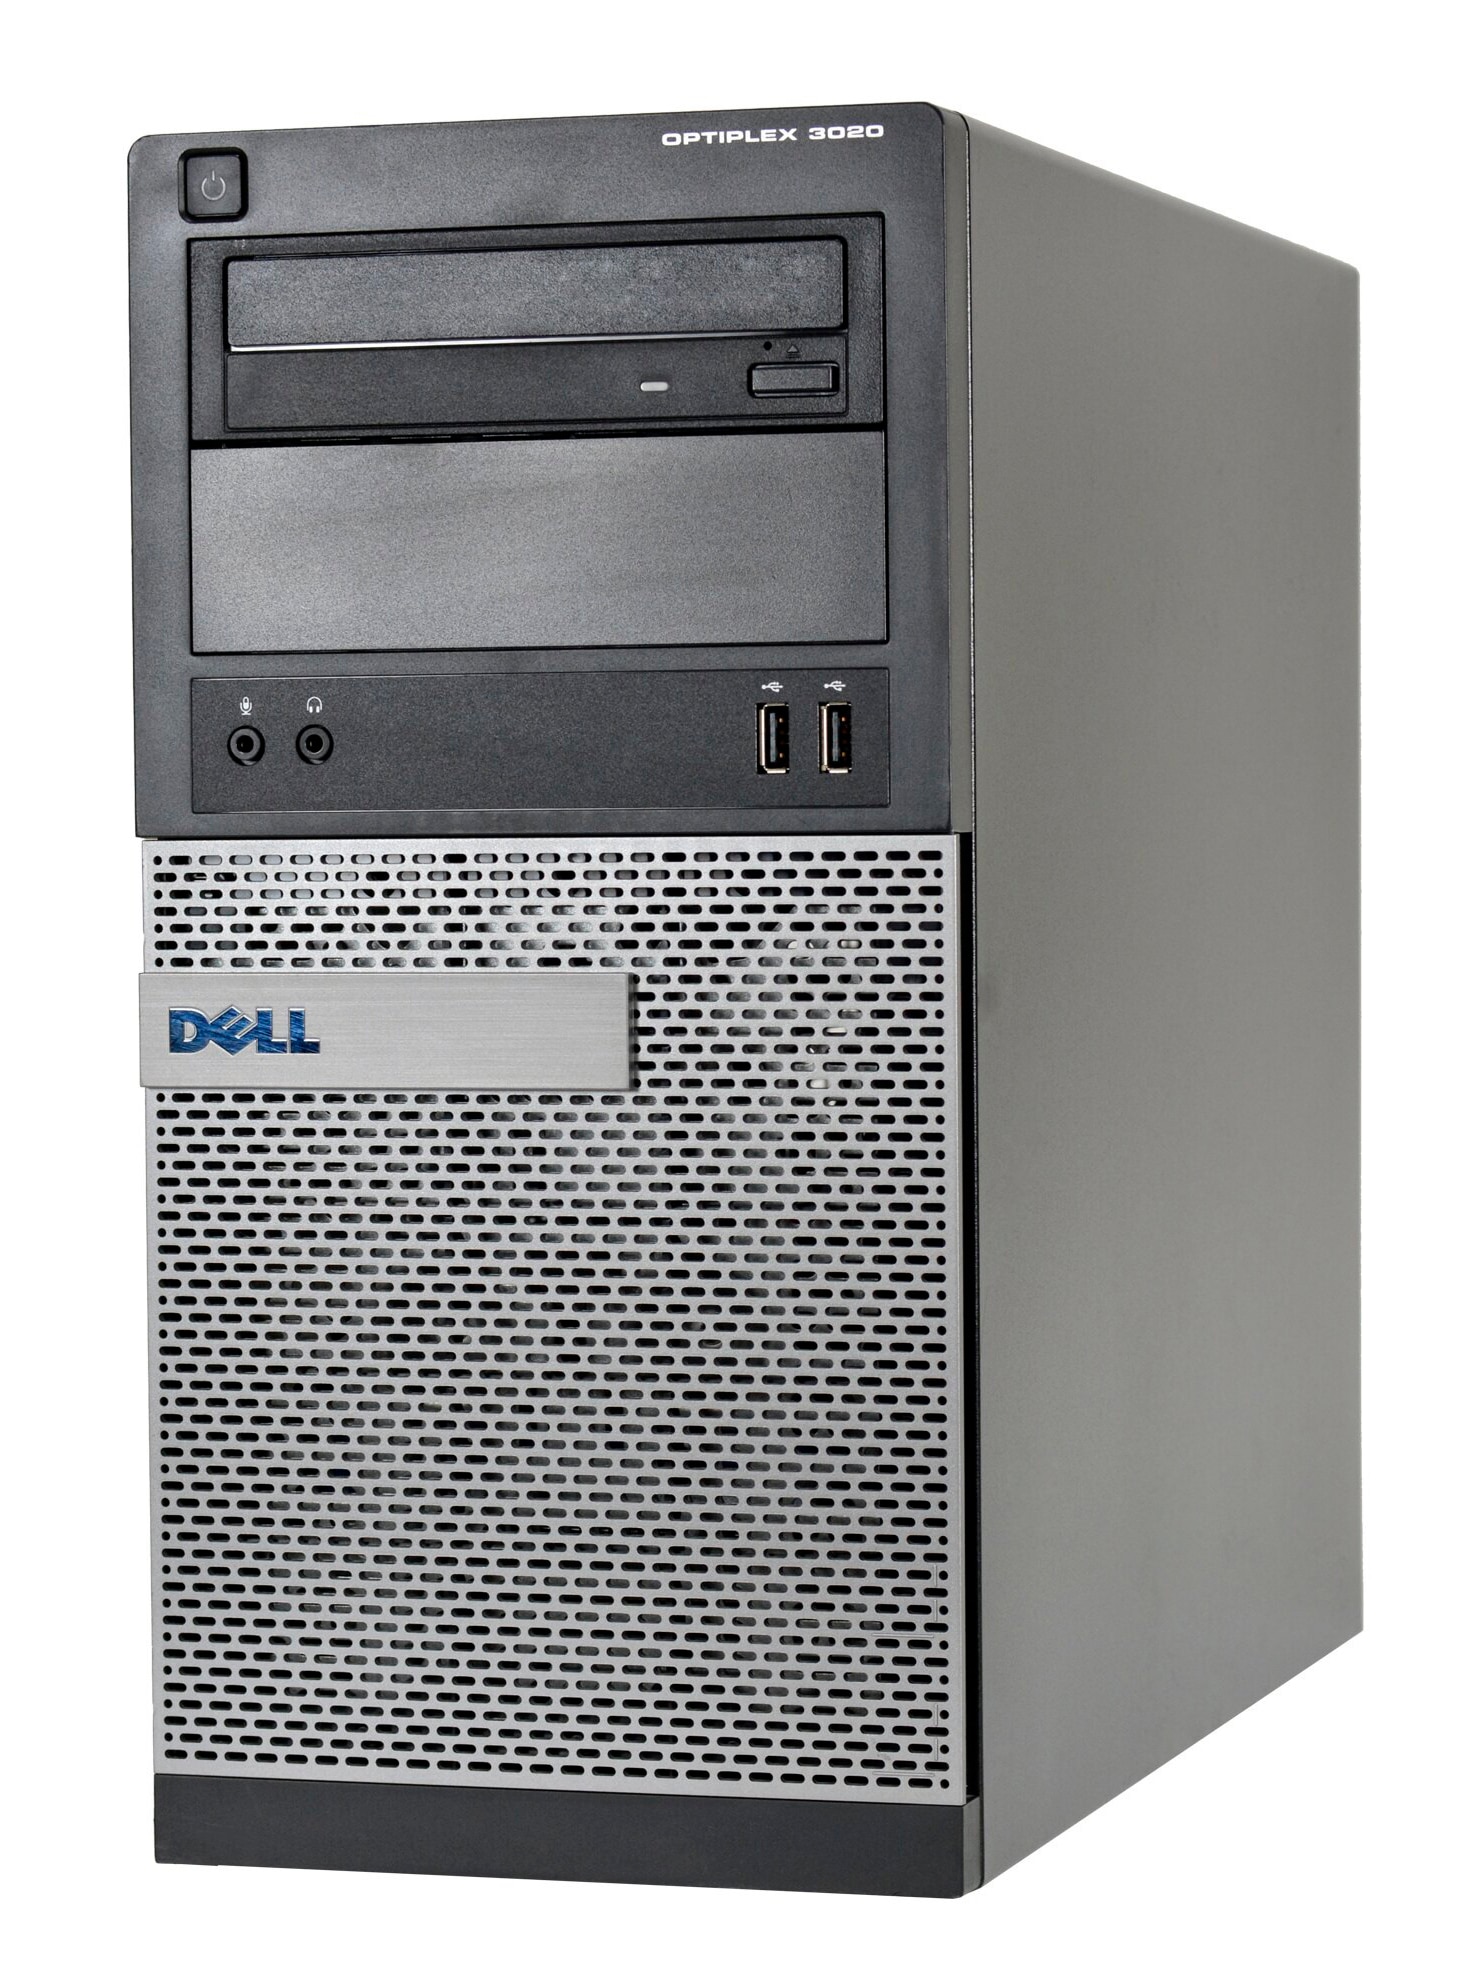 Dell Optiplex 3020 TWR i5-4570 3.2GHz 16GB 512GB SSD Windows 10 Pro  (Refurbished)